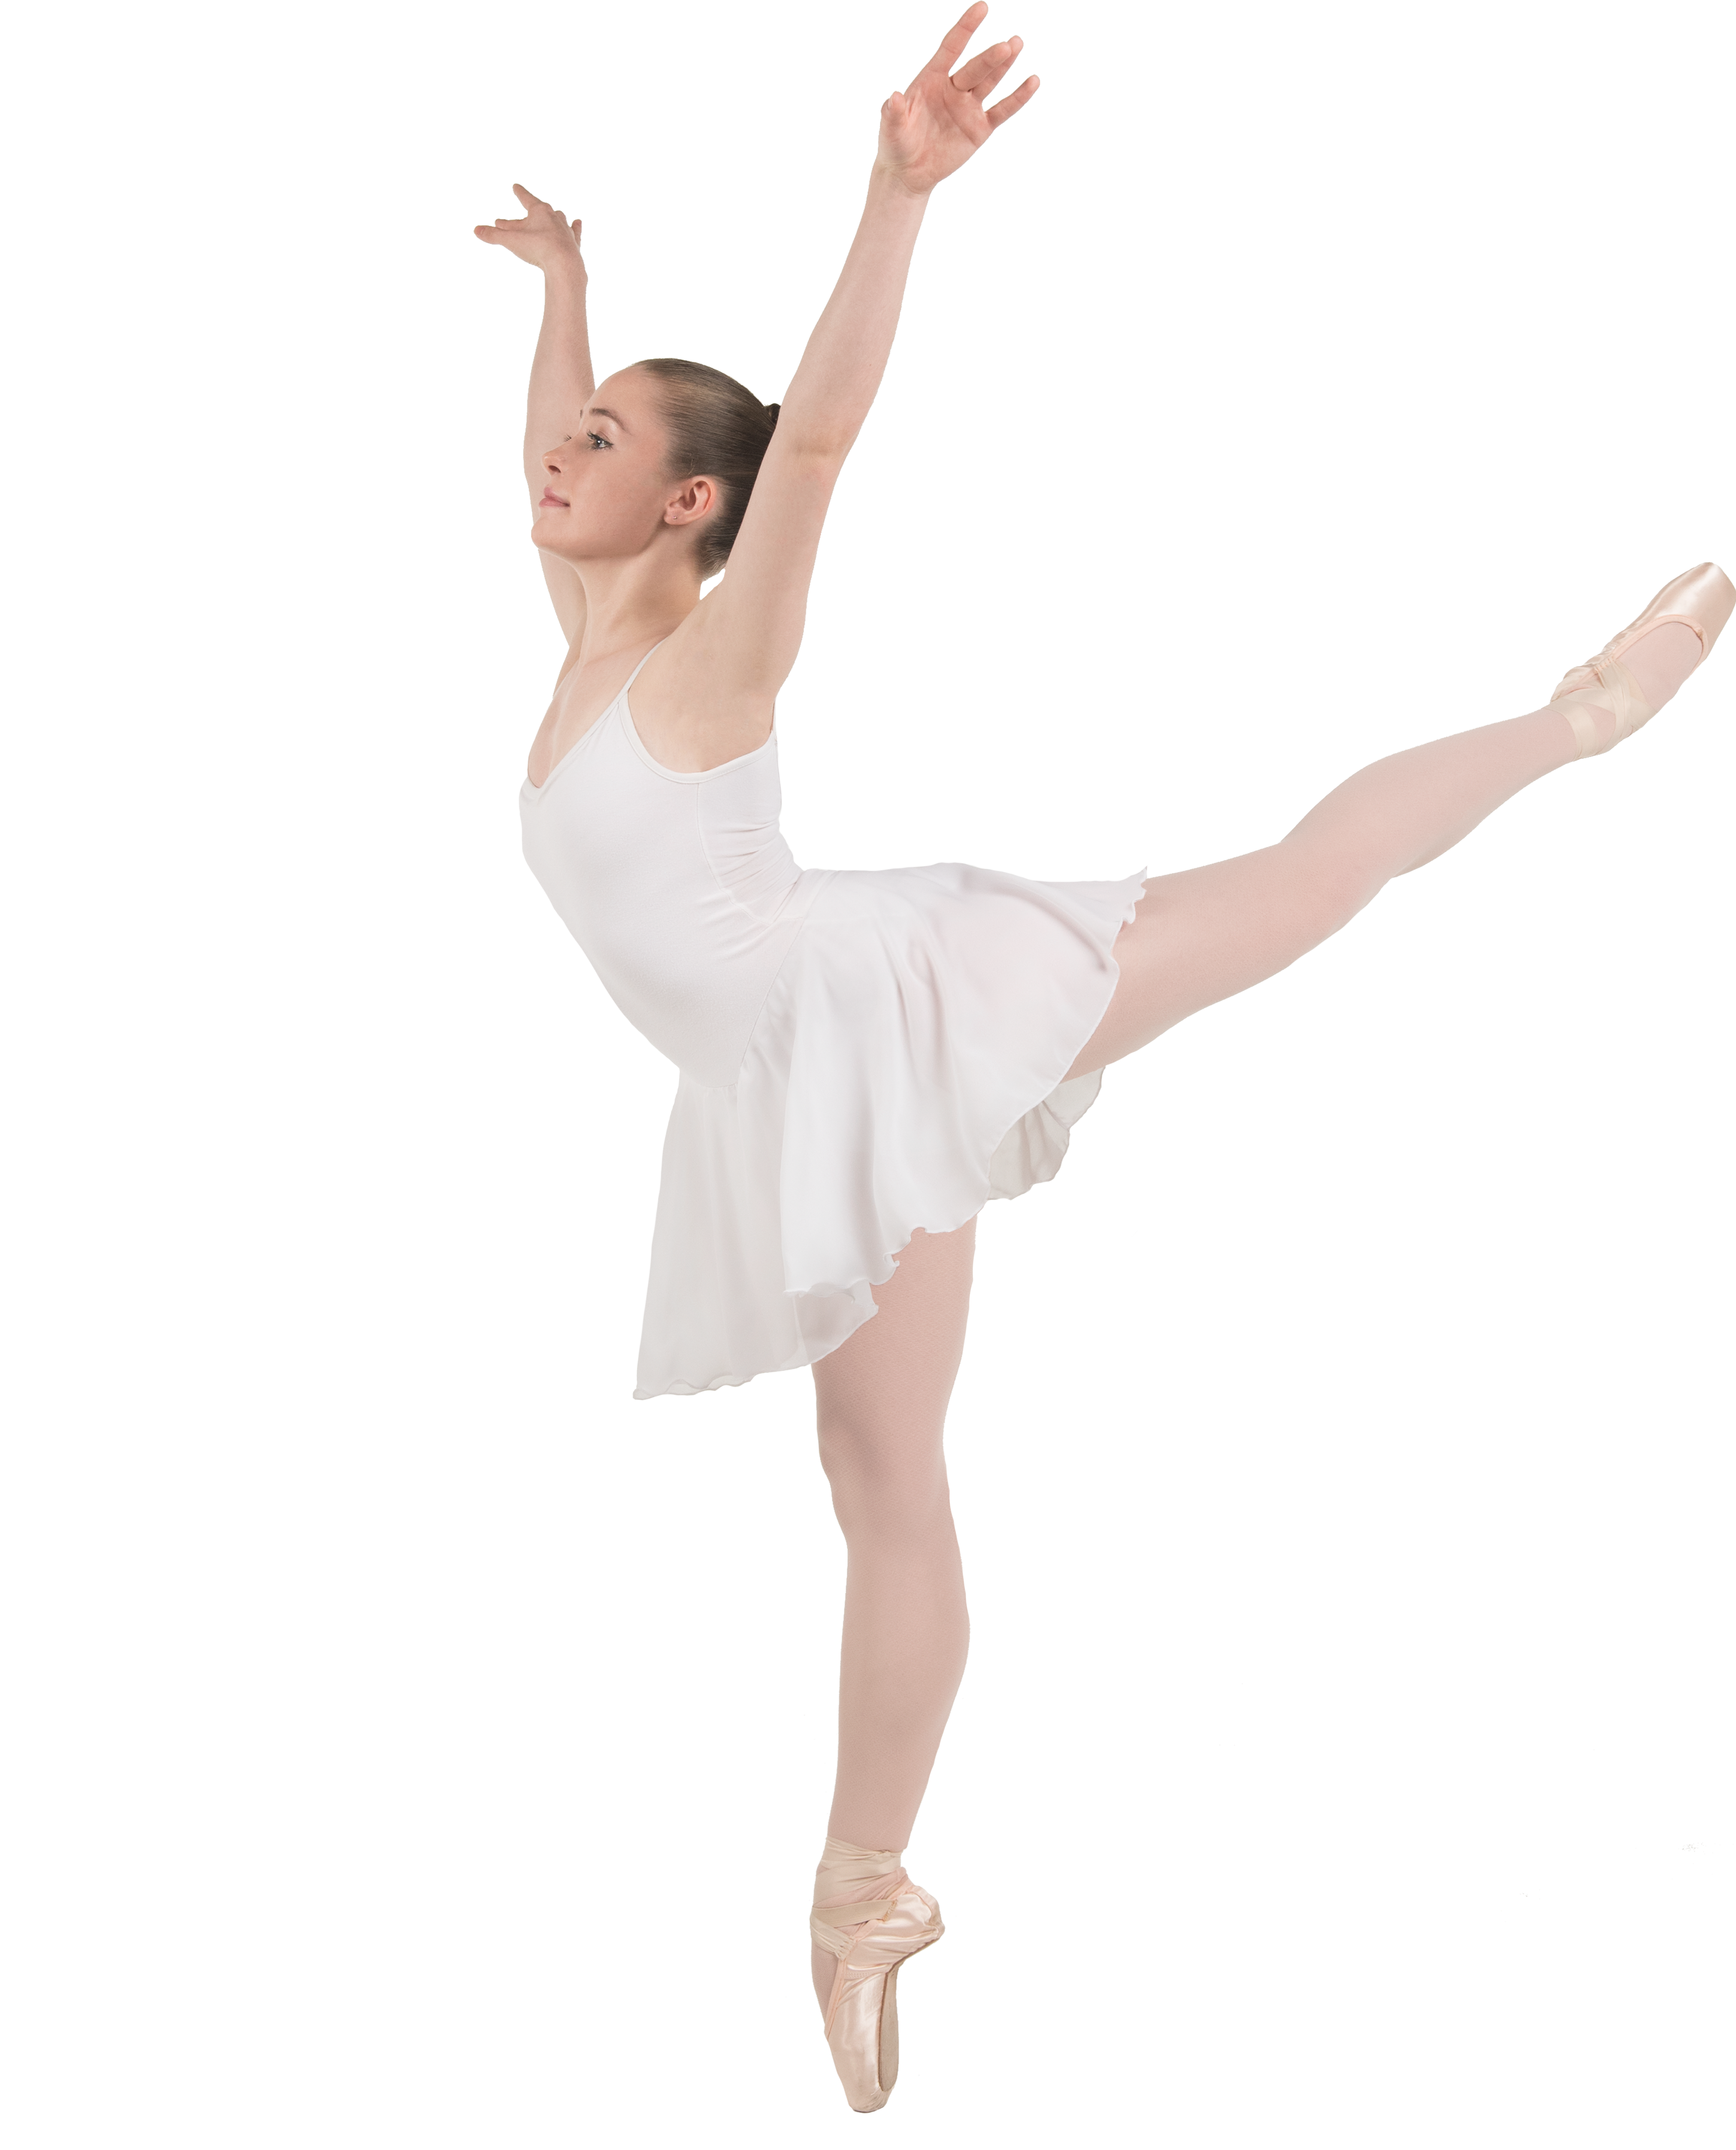 Giselle, Royal Ballet - 2014 revoew